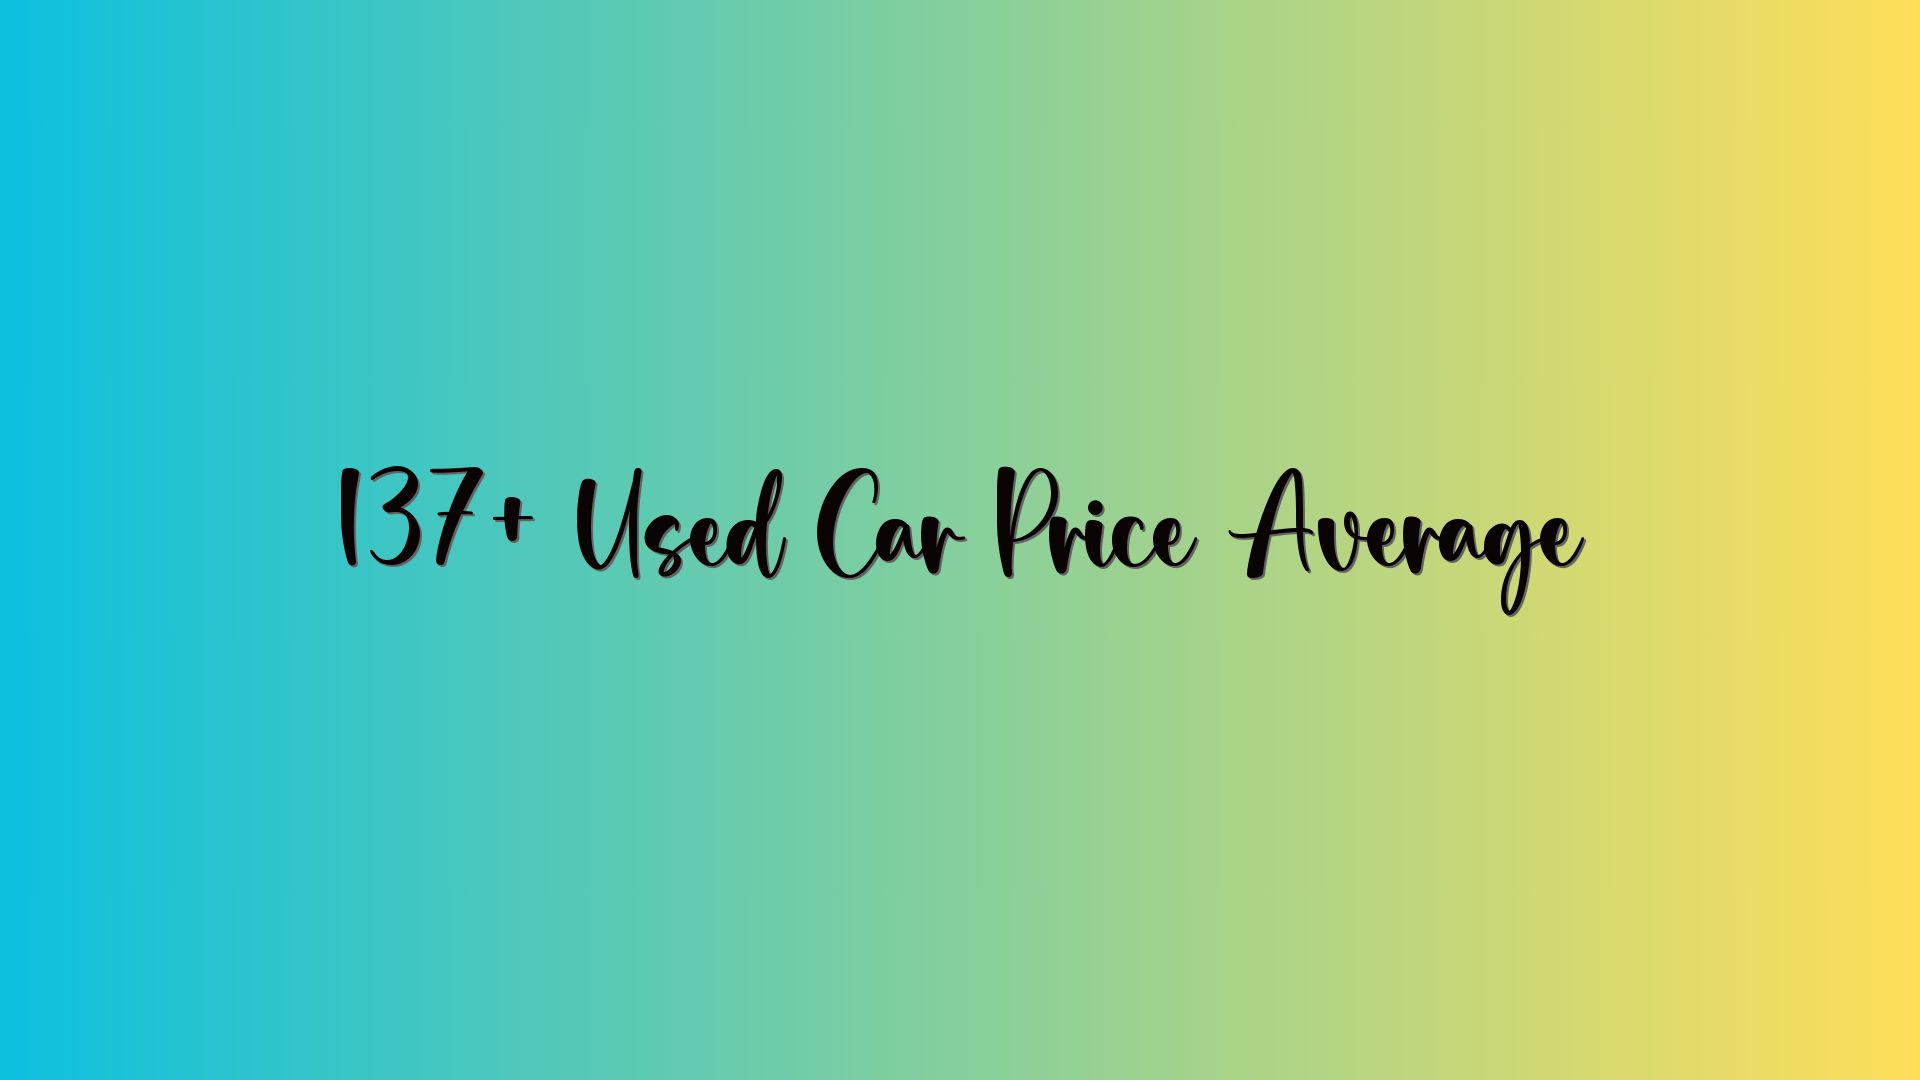 137+ Used Car Price Average